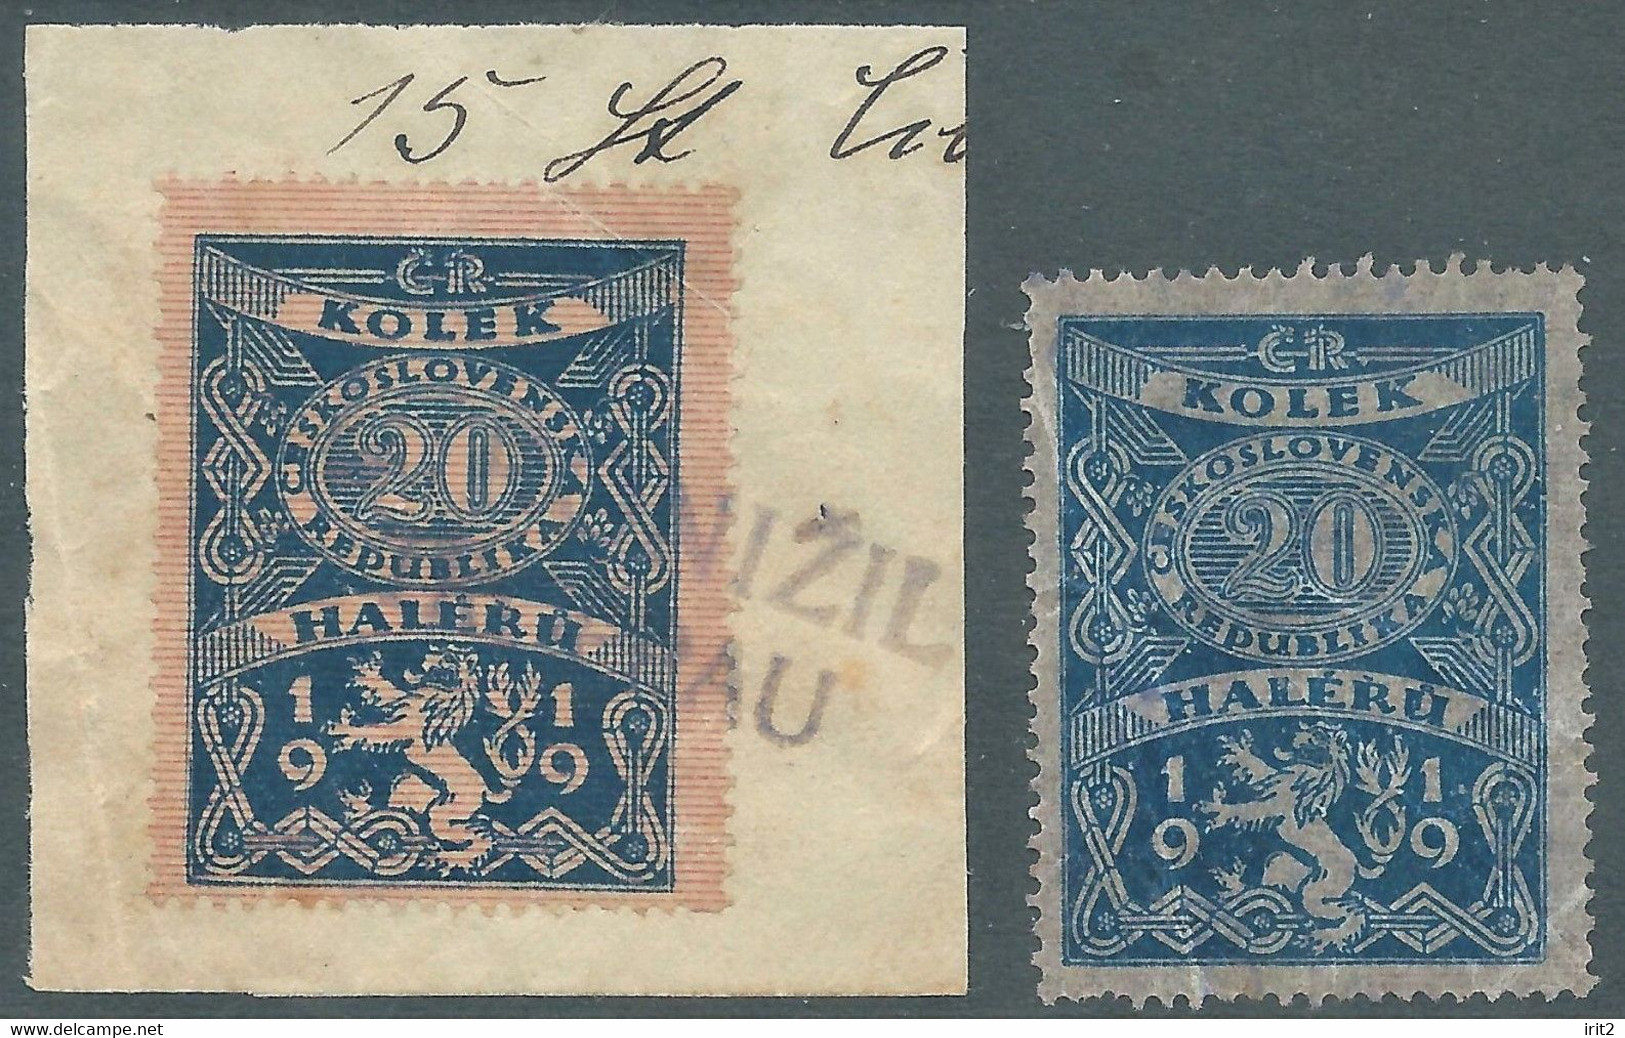 Czechoslovakia - CECOSLOVACCHIA.1919 Revenue Stamps Tax Fiscal,Kolek 20 Haleru,Used - Dienstzegels